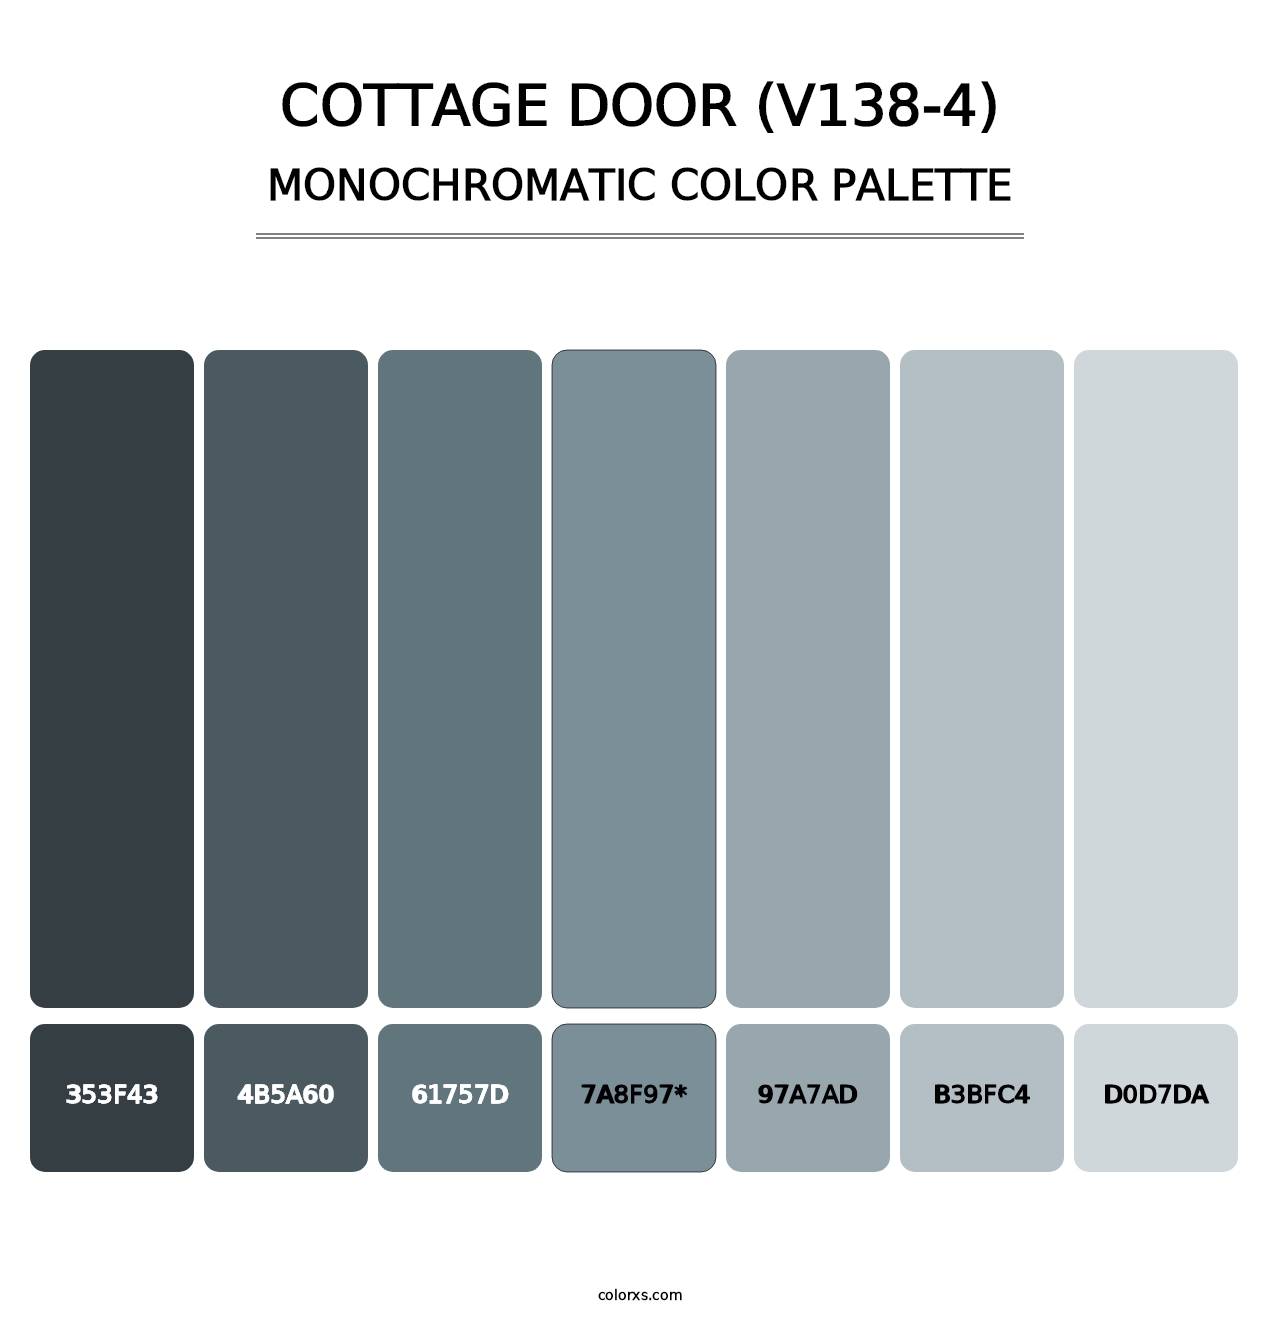 Cottage Door (V138-4) - Monochromatic Color Palette